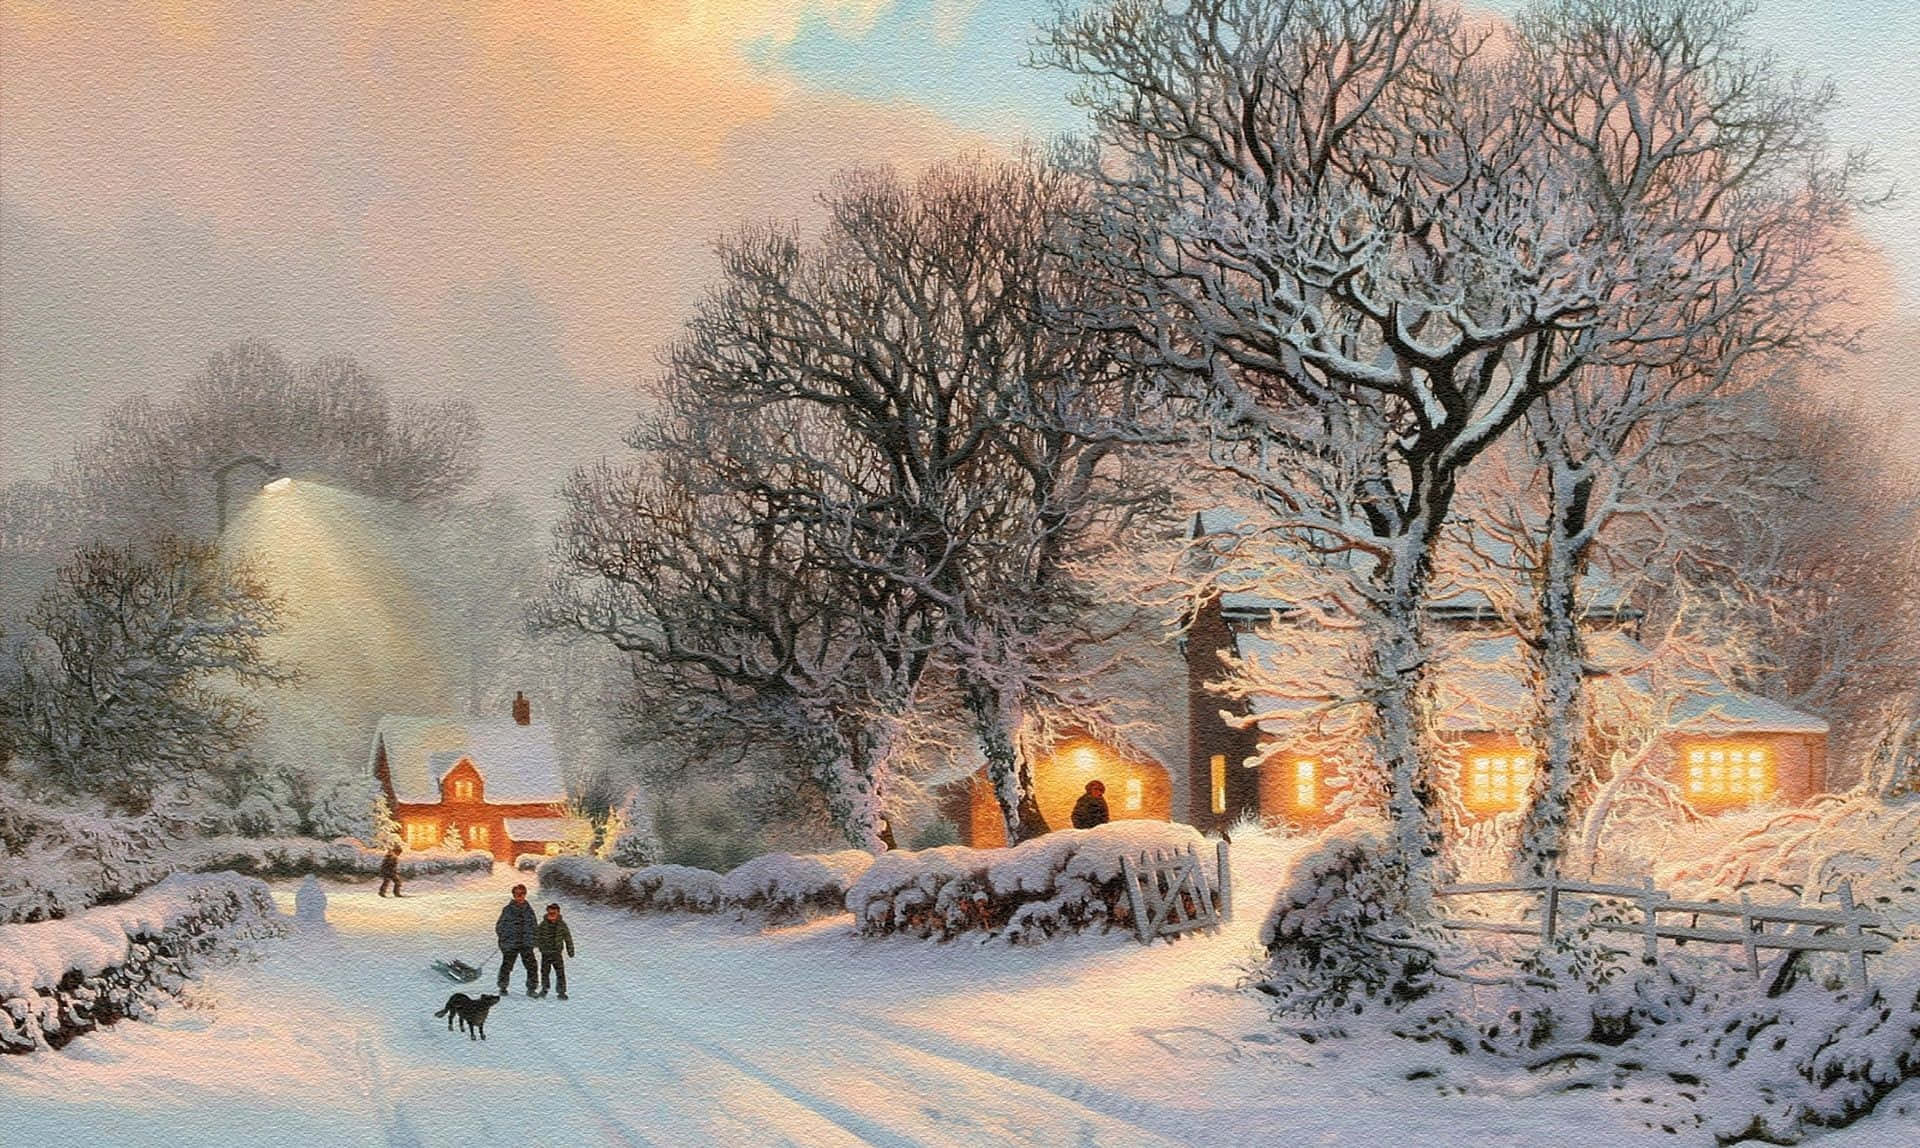 Enchanting Winter Wonderland Painting Wallpaper